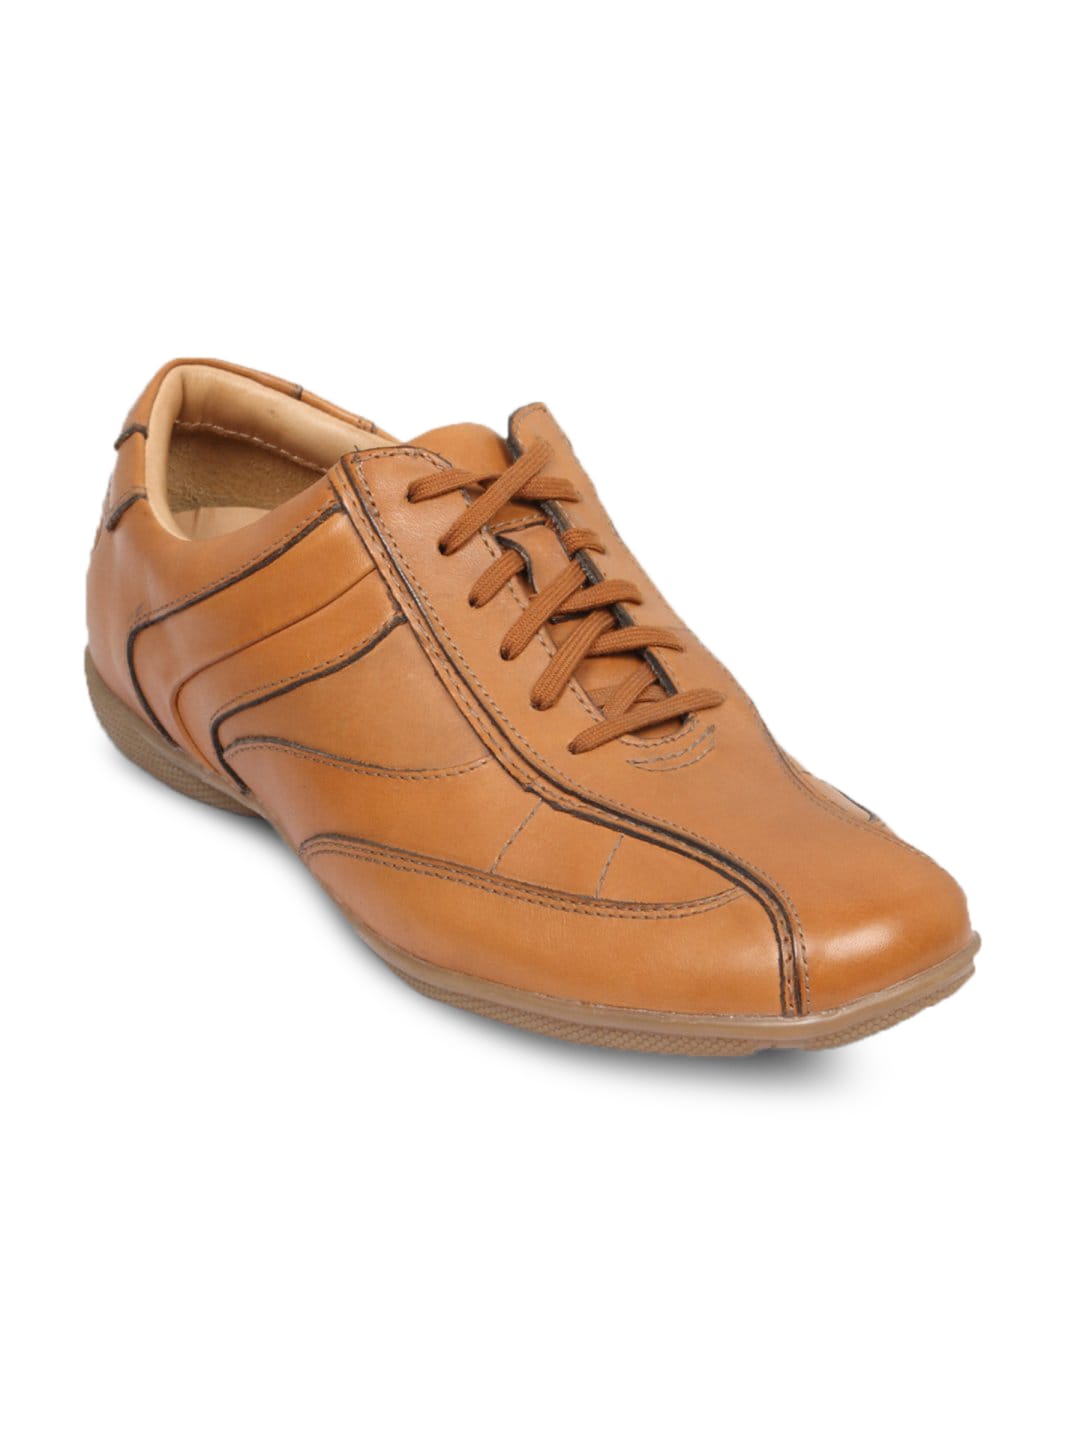 Rockport Men's Monte Road Light Tan Brown Shoe